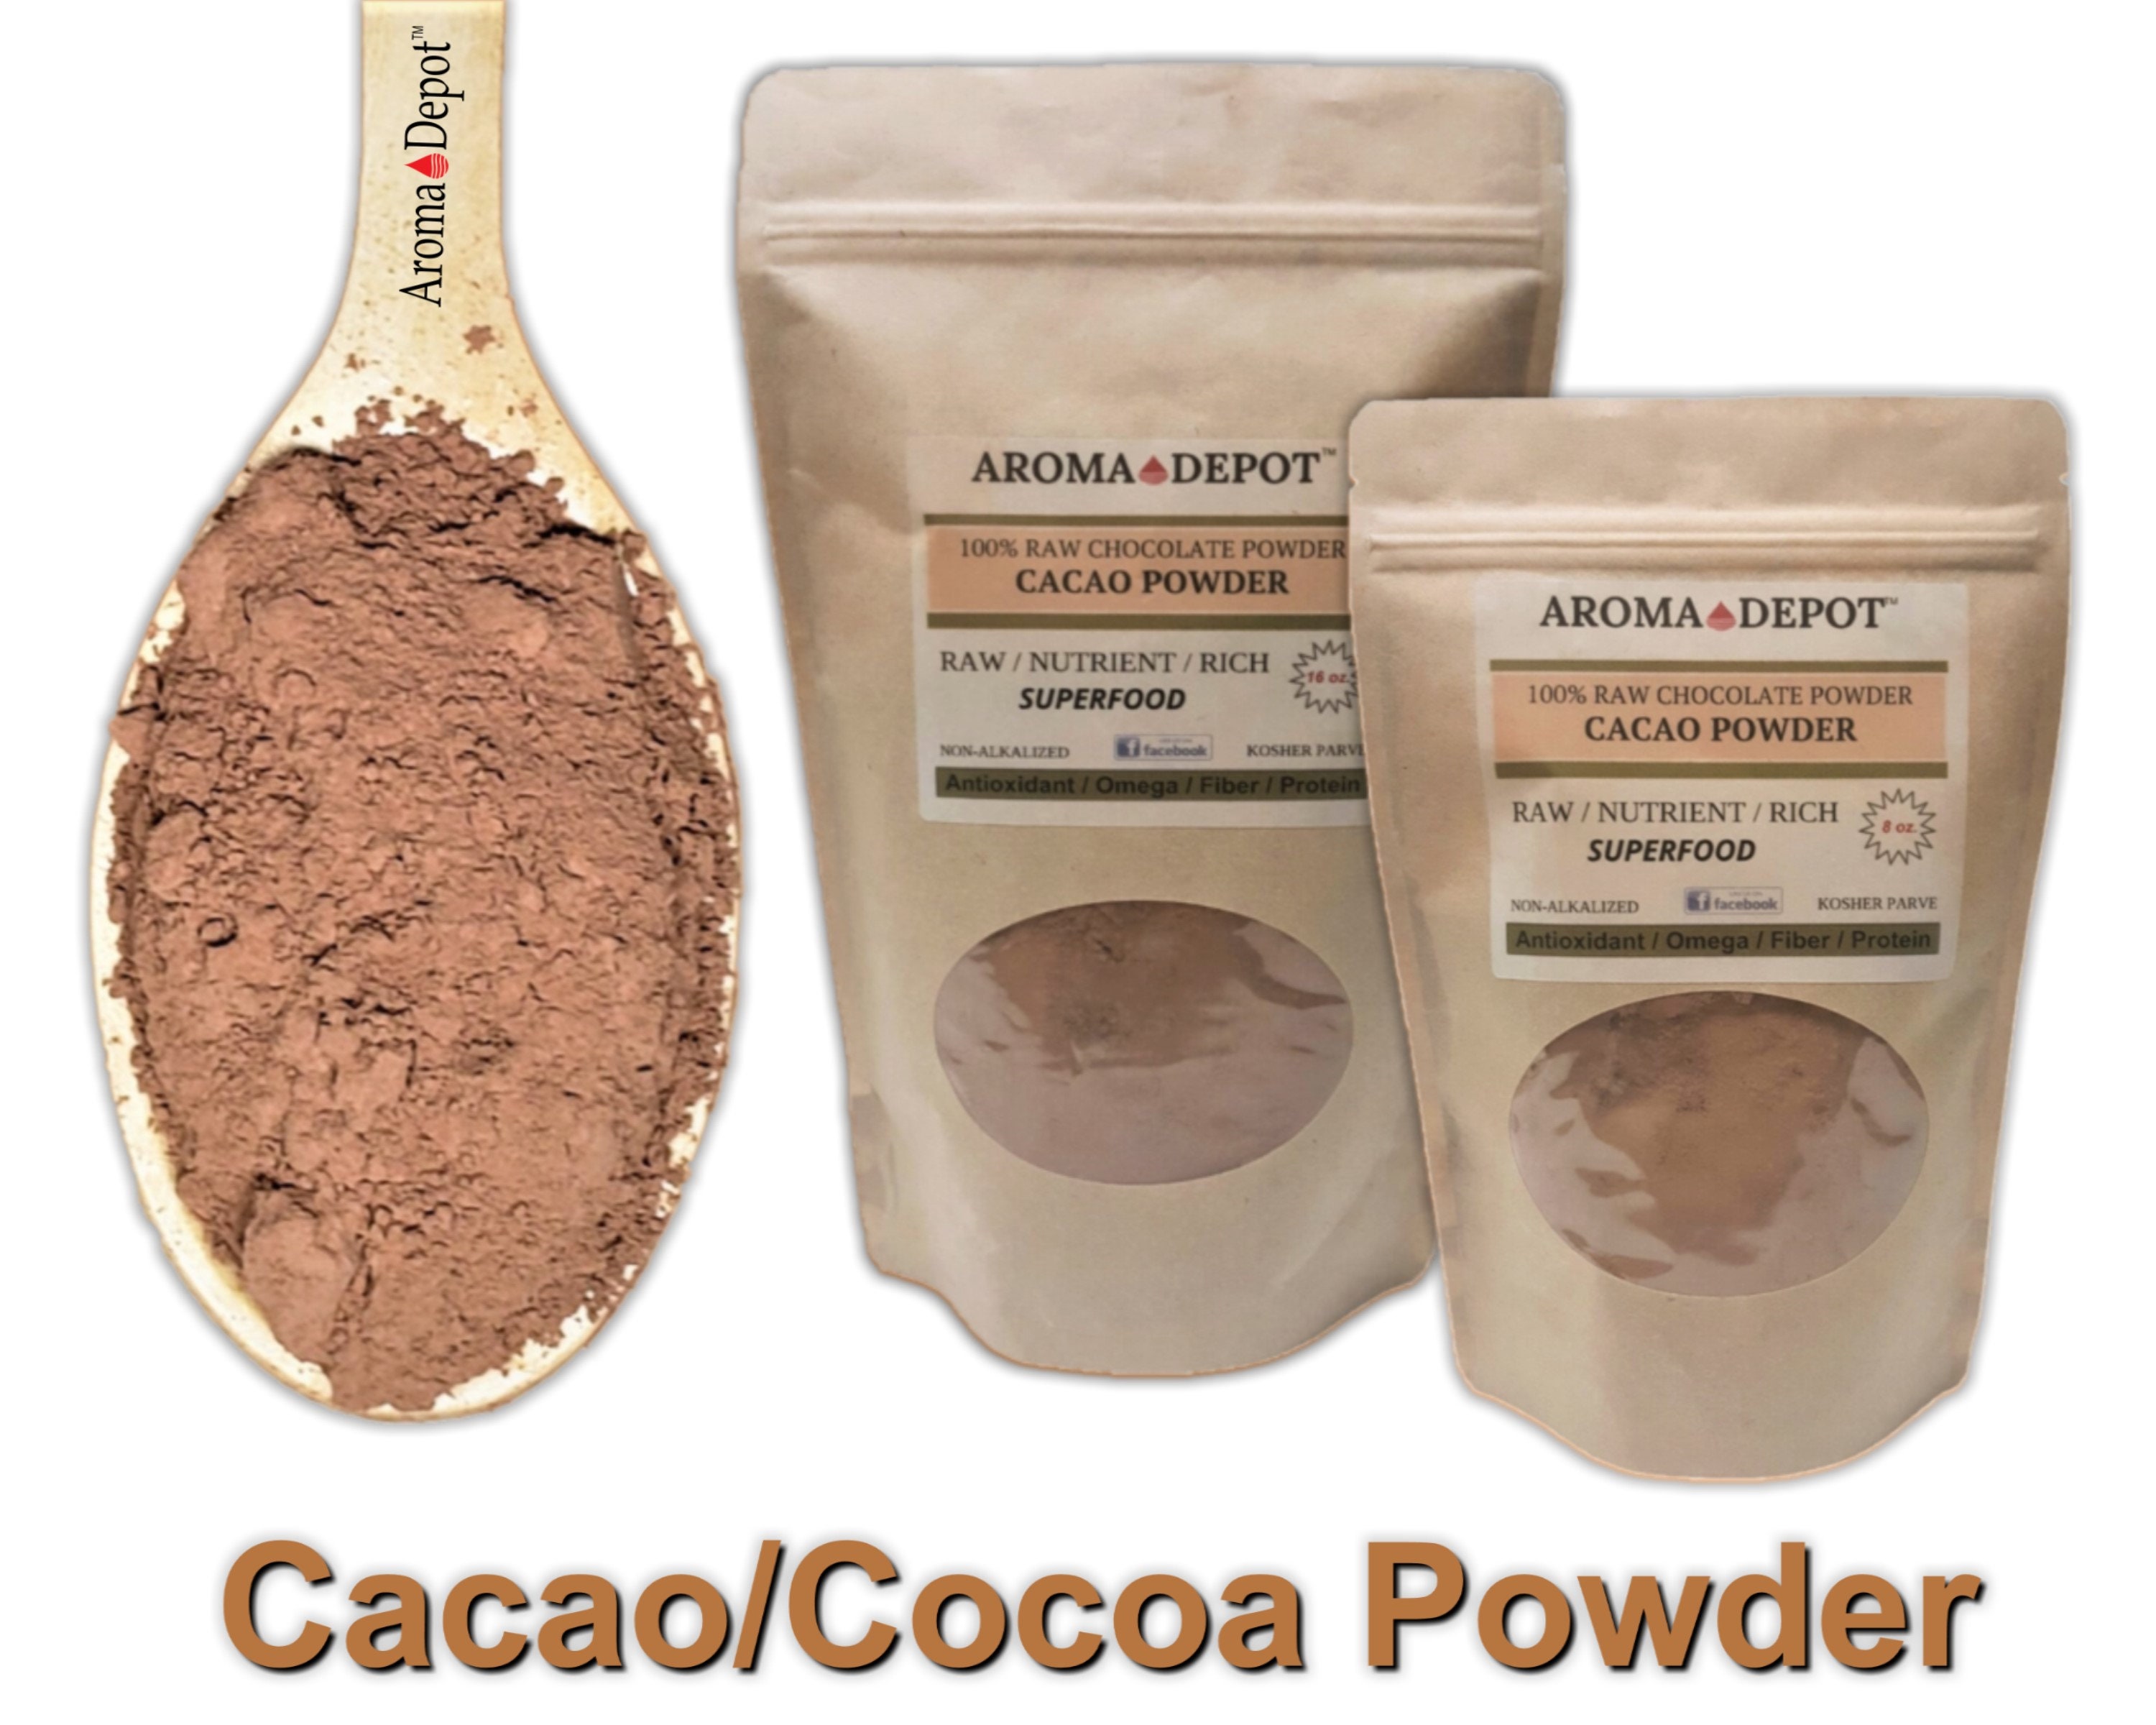 Black Cocoa Powder, High Quality Dark Chocolate, Baking Cocoa 